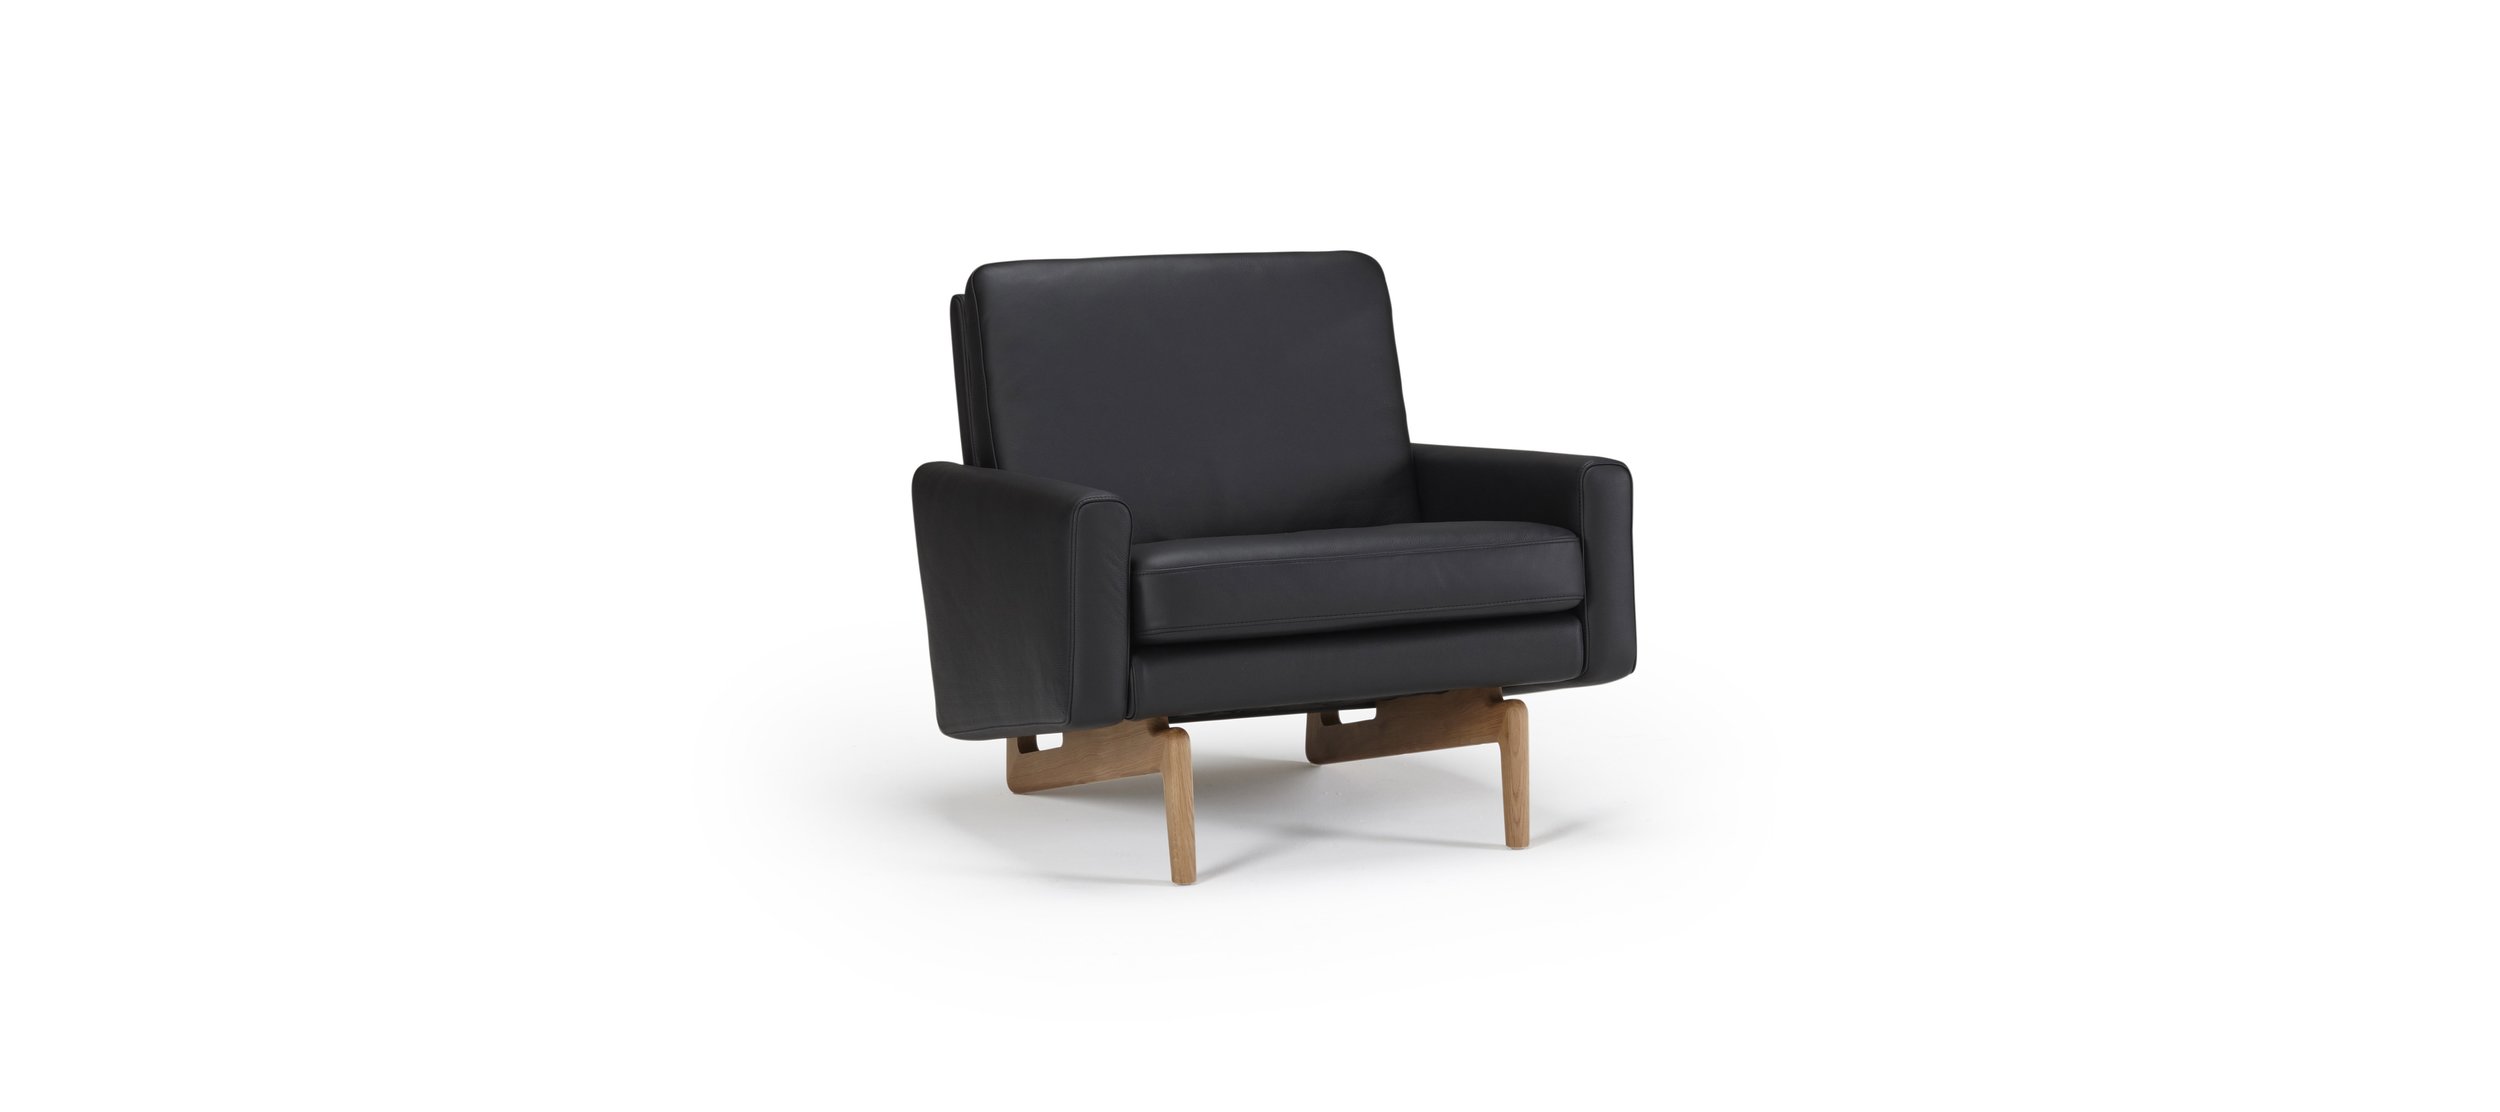 K200-chair-arms-800-black-p4.jpg